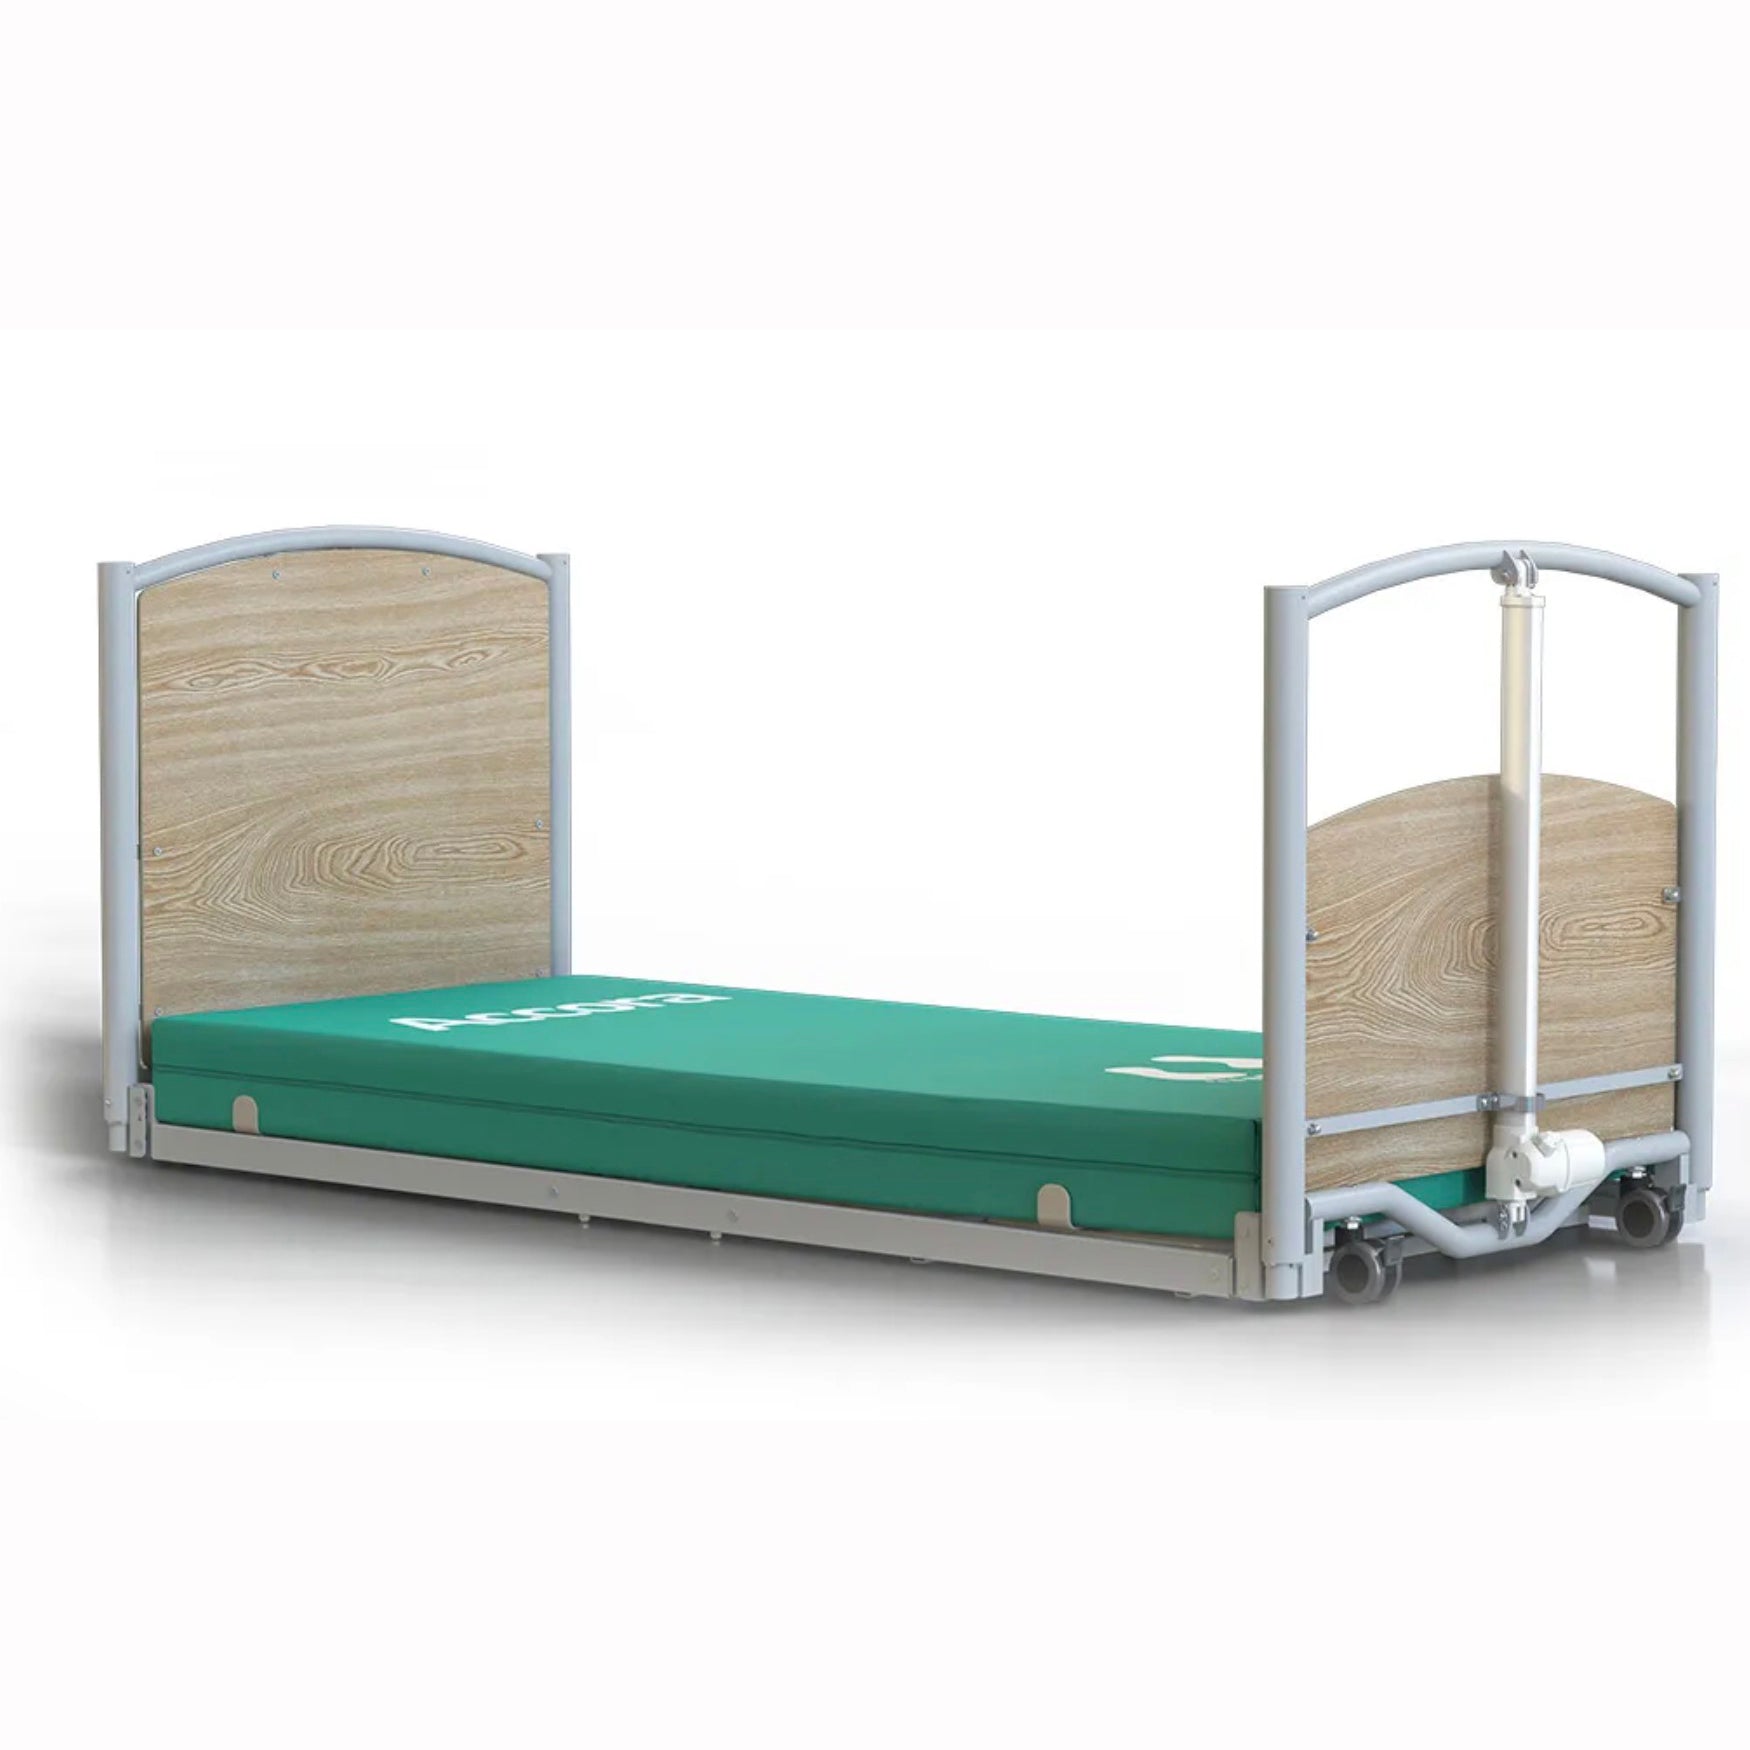 Accora FloorBed1 Hi-Low Hospital Bed